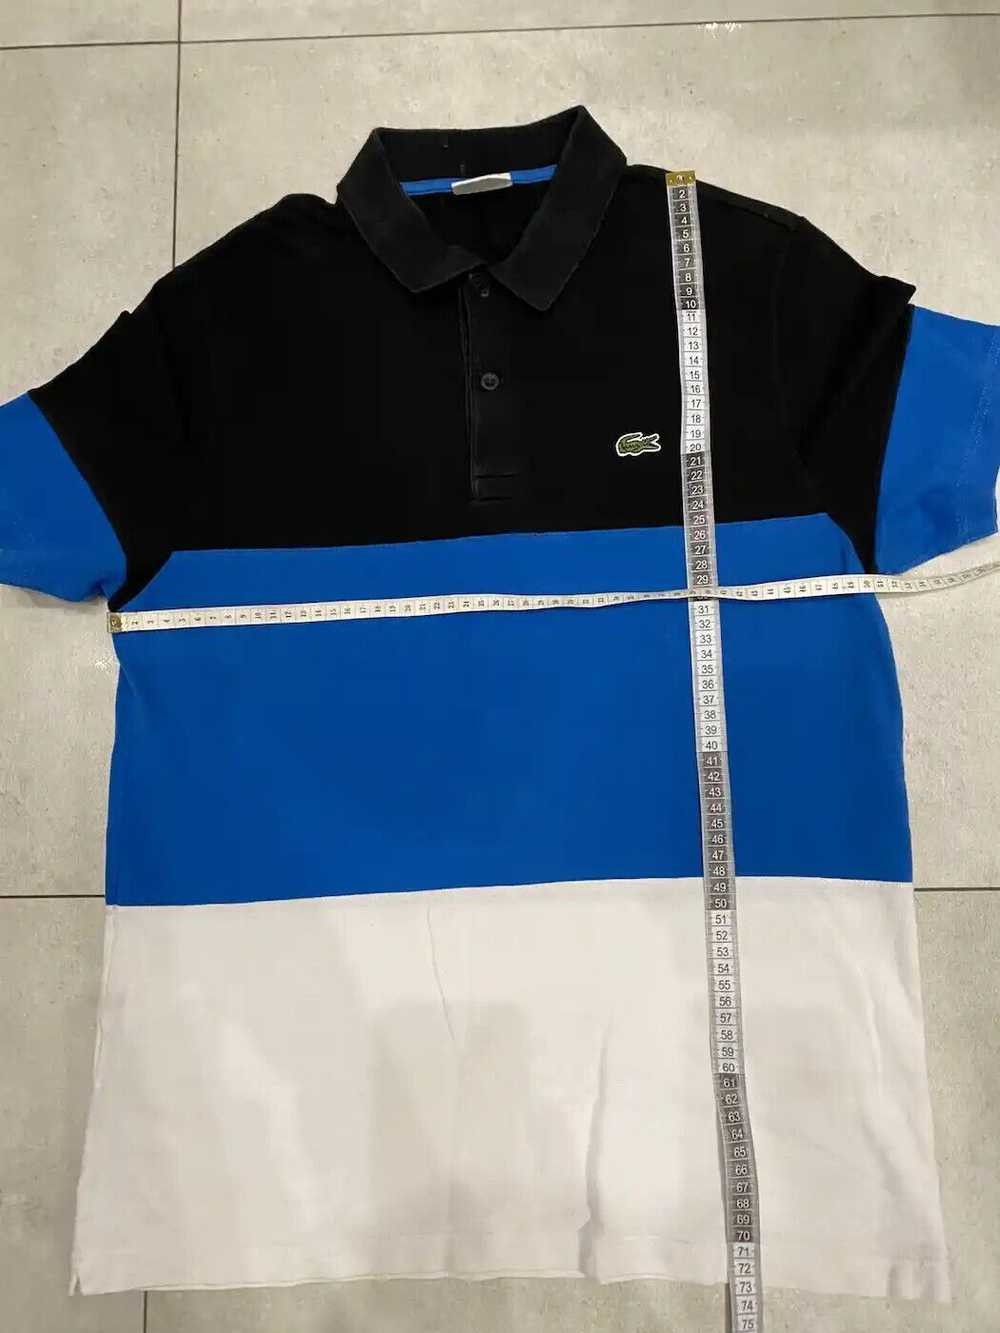 Lacoste Lacoste Sport SS polo shirt size L - image 5